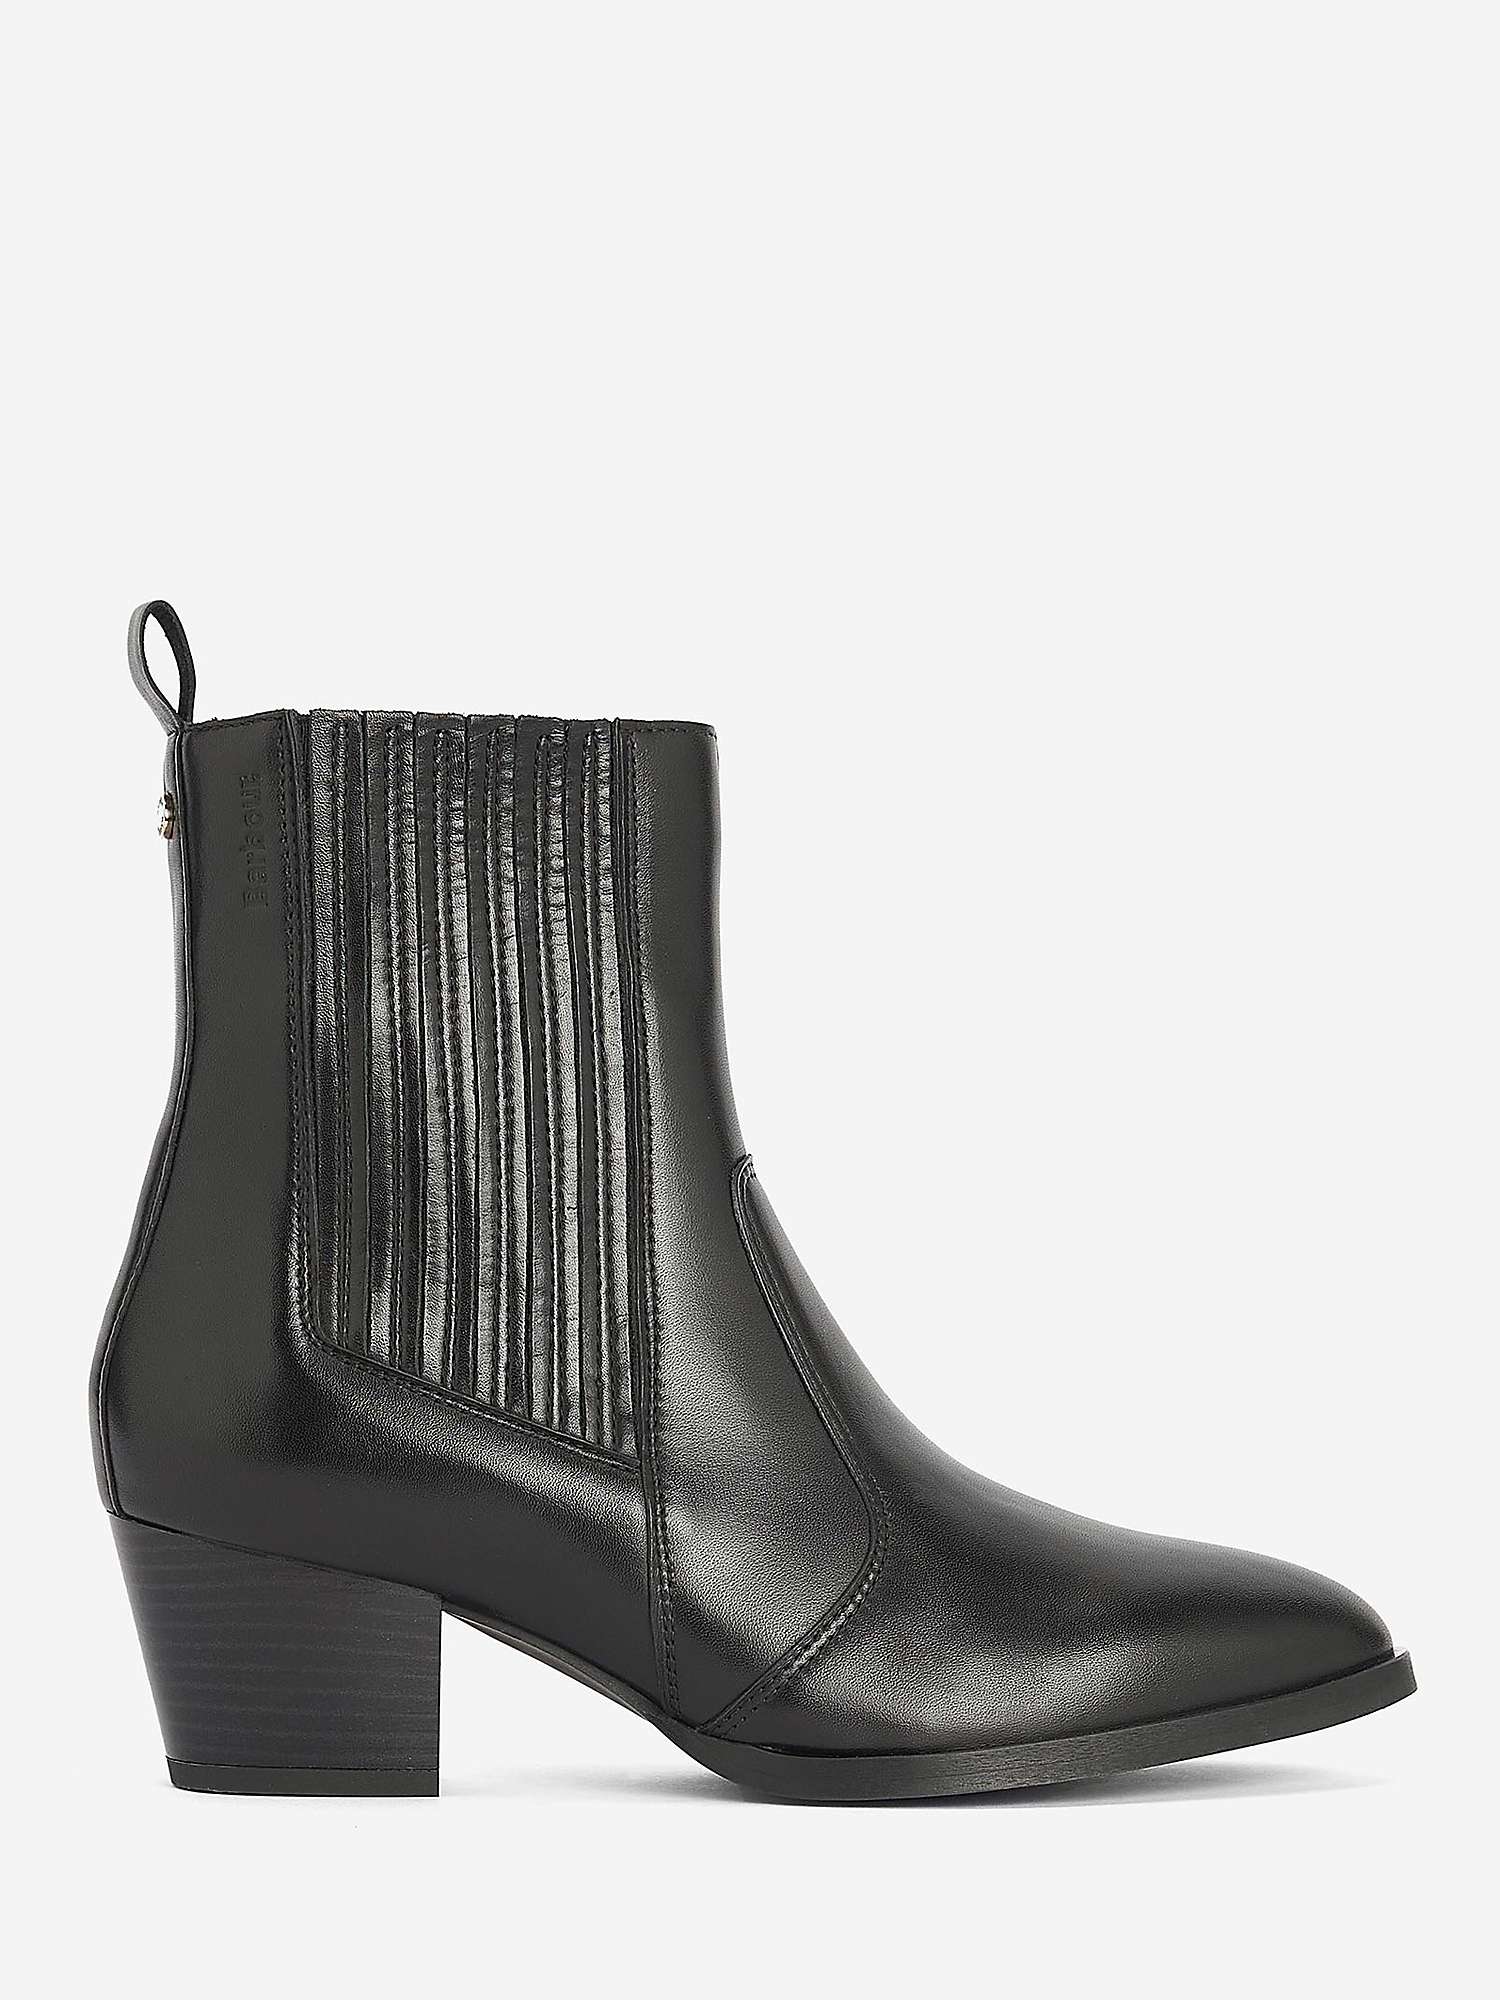 Buy Barbour Elsa Chelsea Leather Boots, Black Online at johnlewis.com